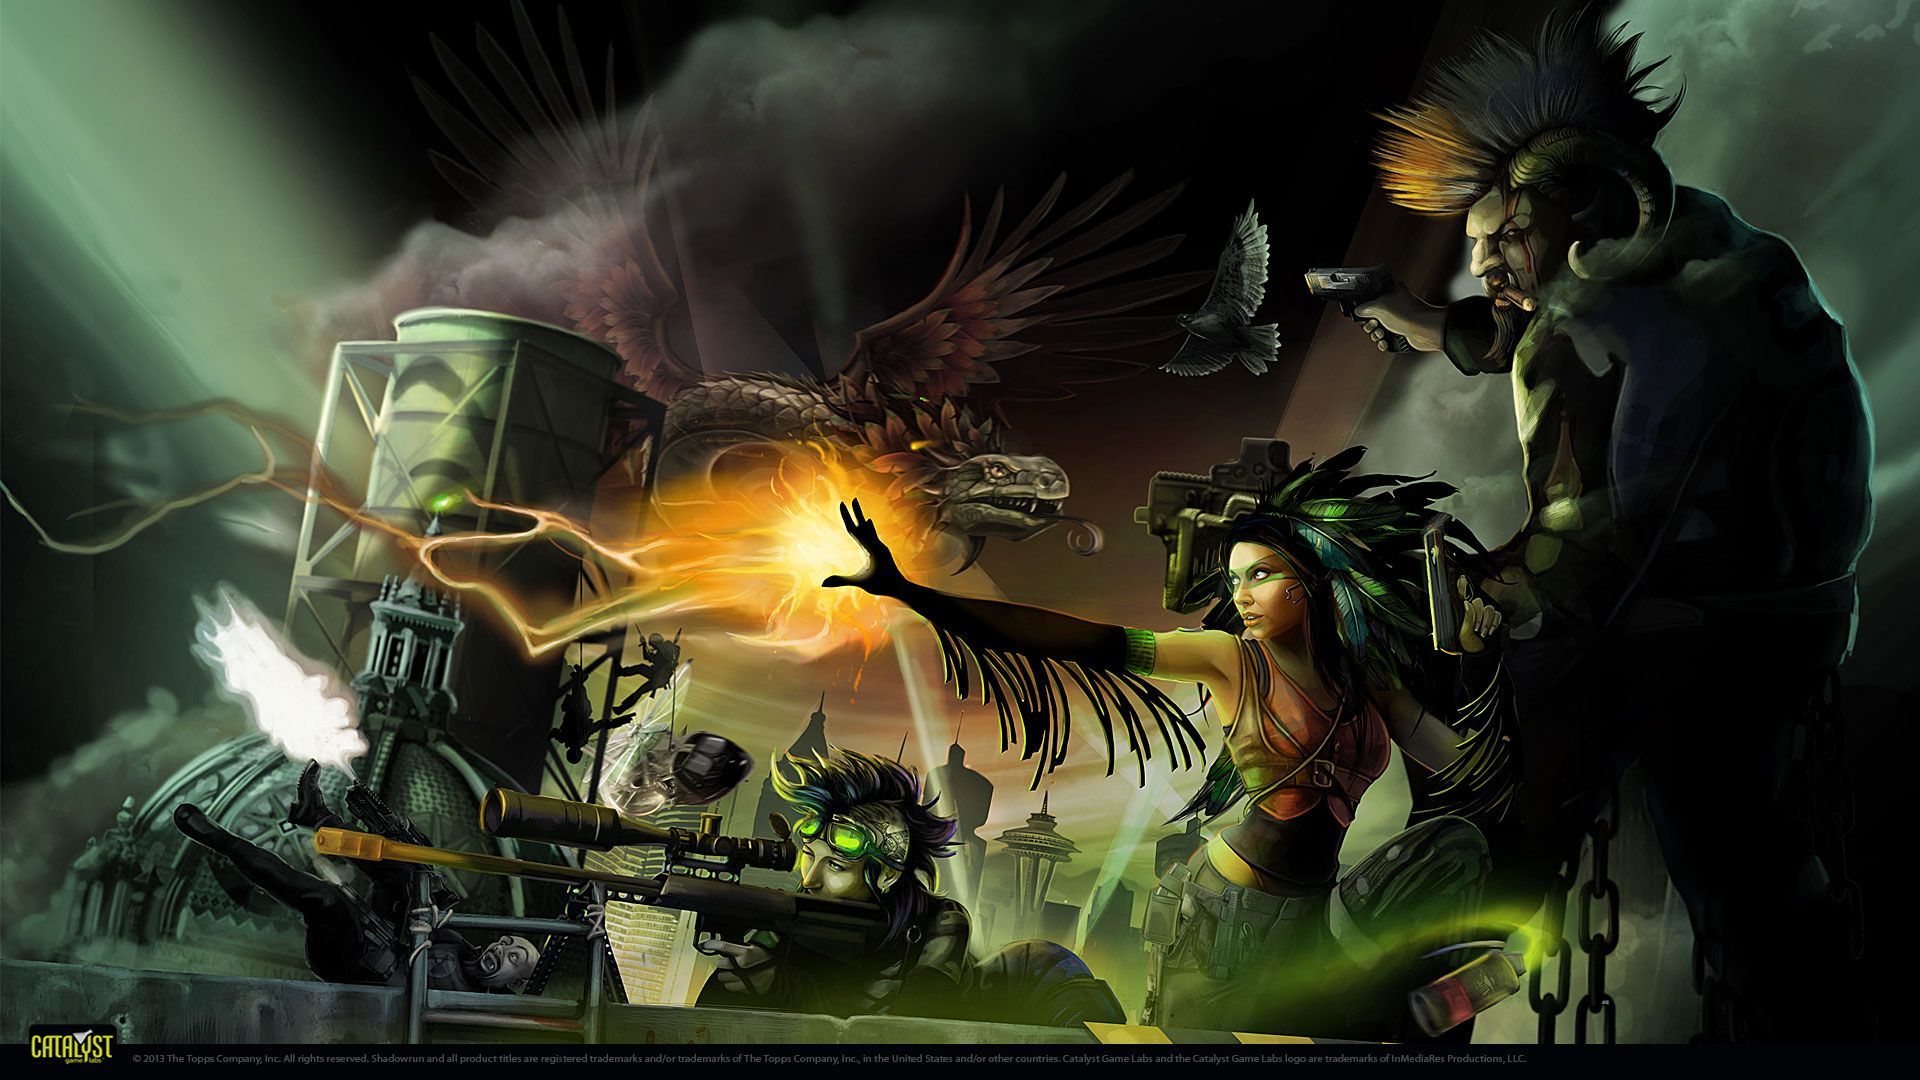 Wallpaper. Shadowrun 5. Shadowrun, Shadowrun rpg, Cyberpunk